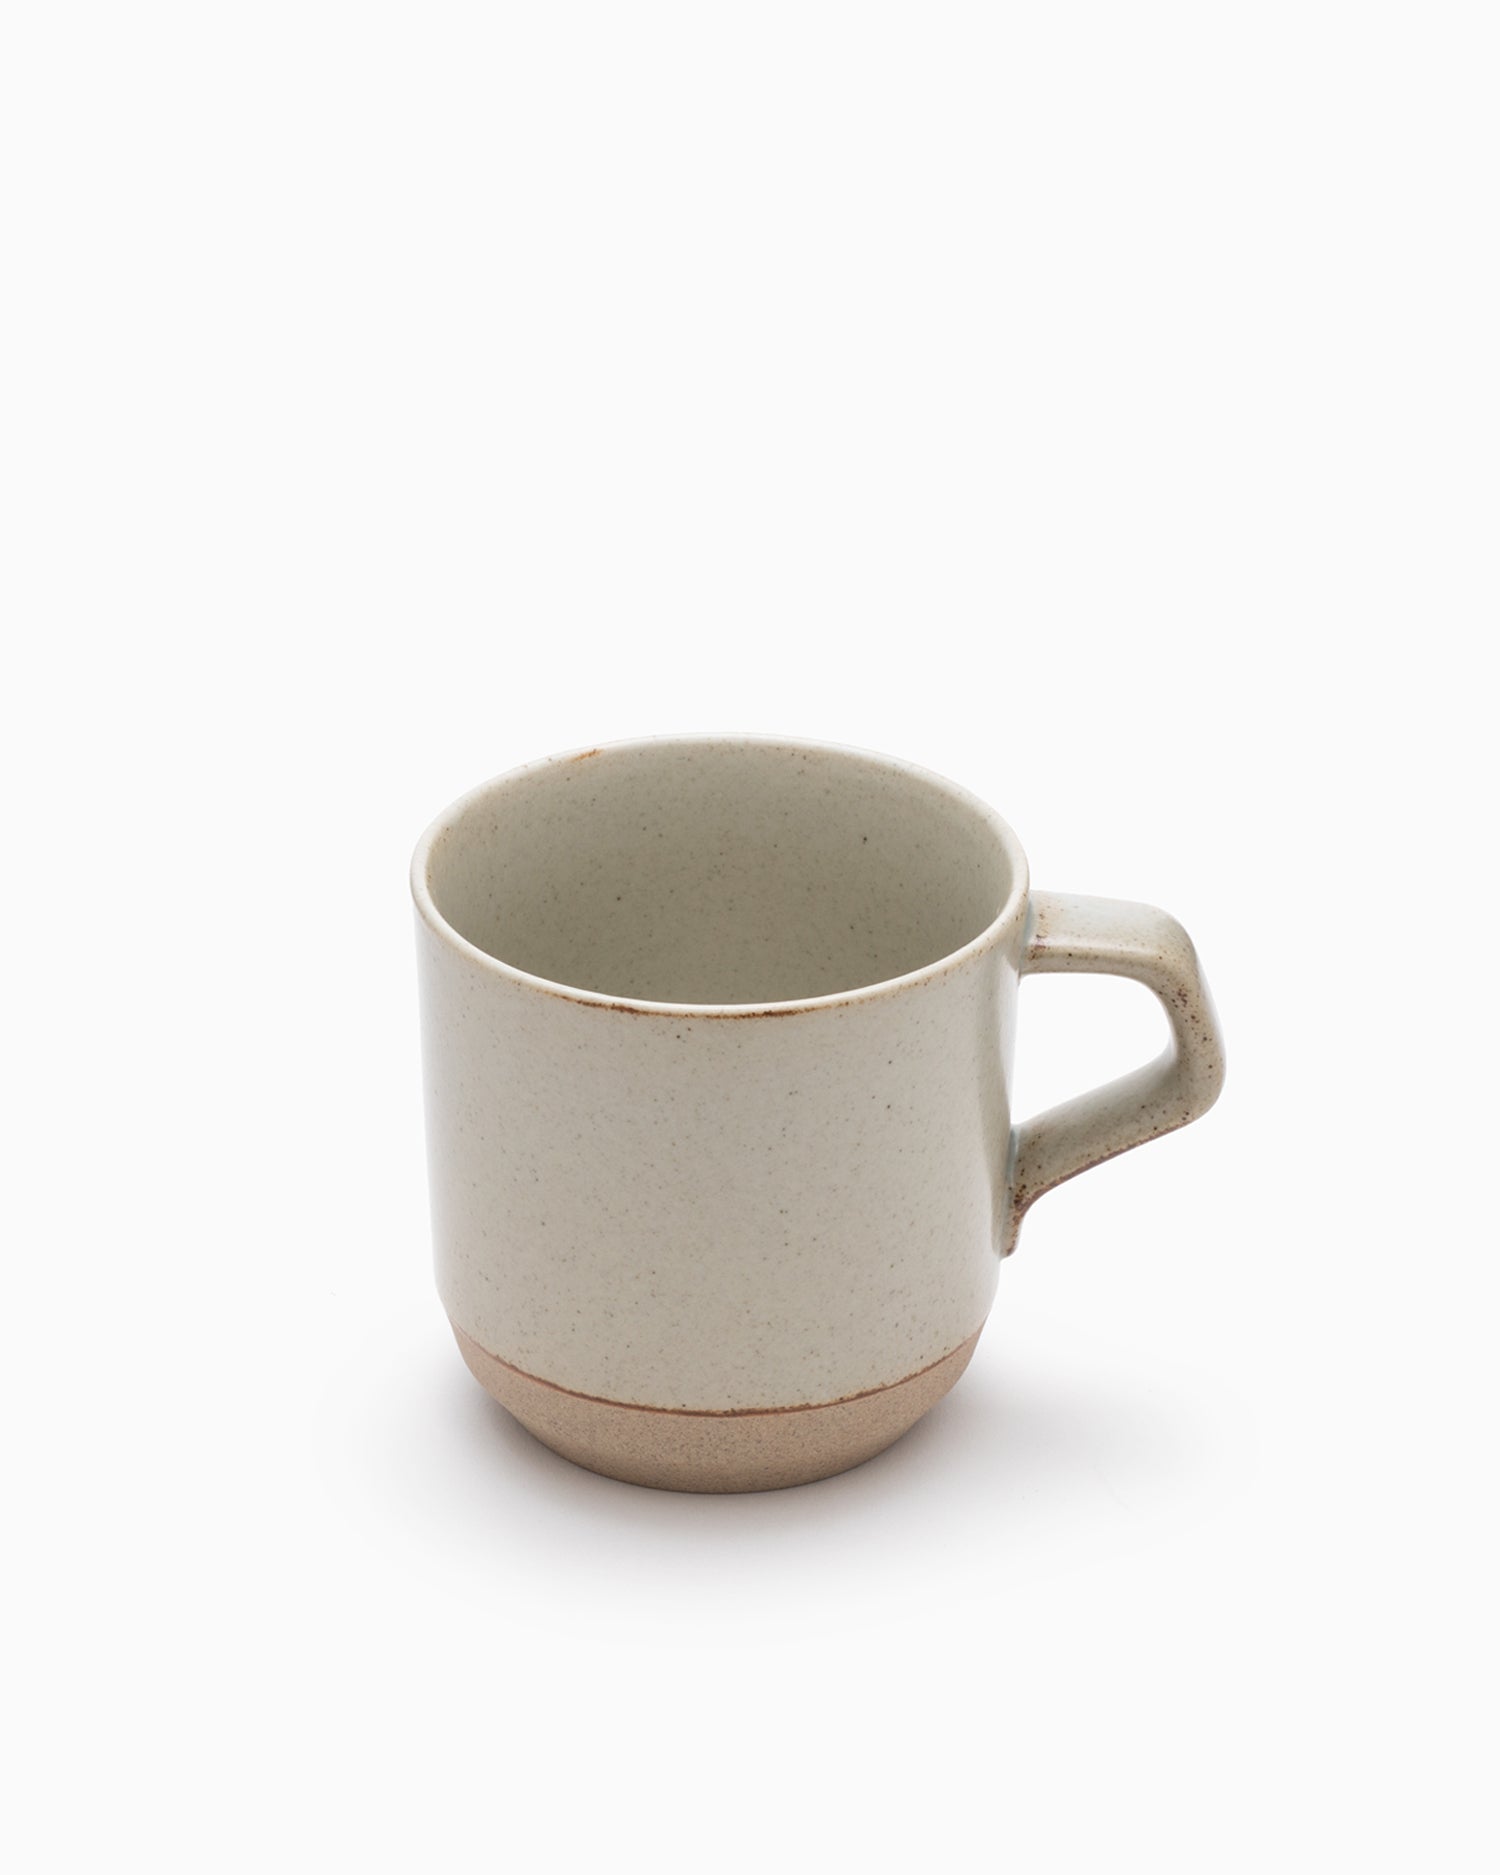 CLK-151 Small Mug - Beige